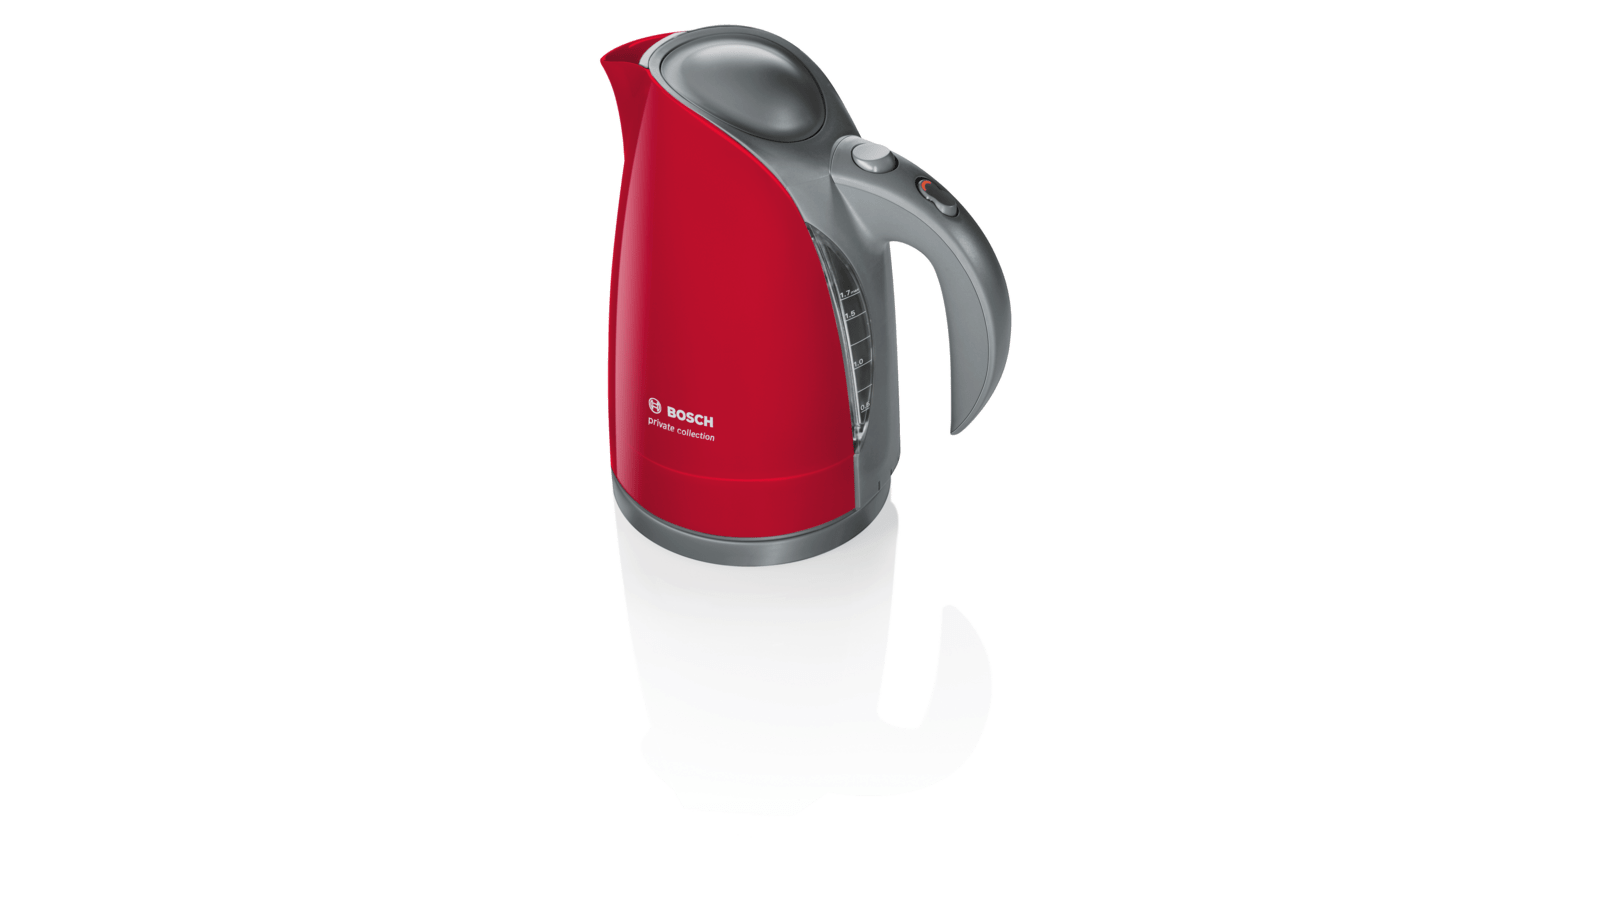 Чайник Klein Bosch 9548. Бош чайник электрический 7507. Чайник электрический Bosch twk3a014, красный. Чайник Bosch Tea spot.